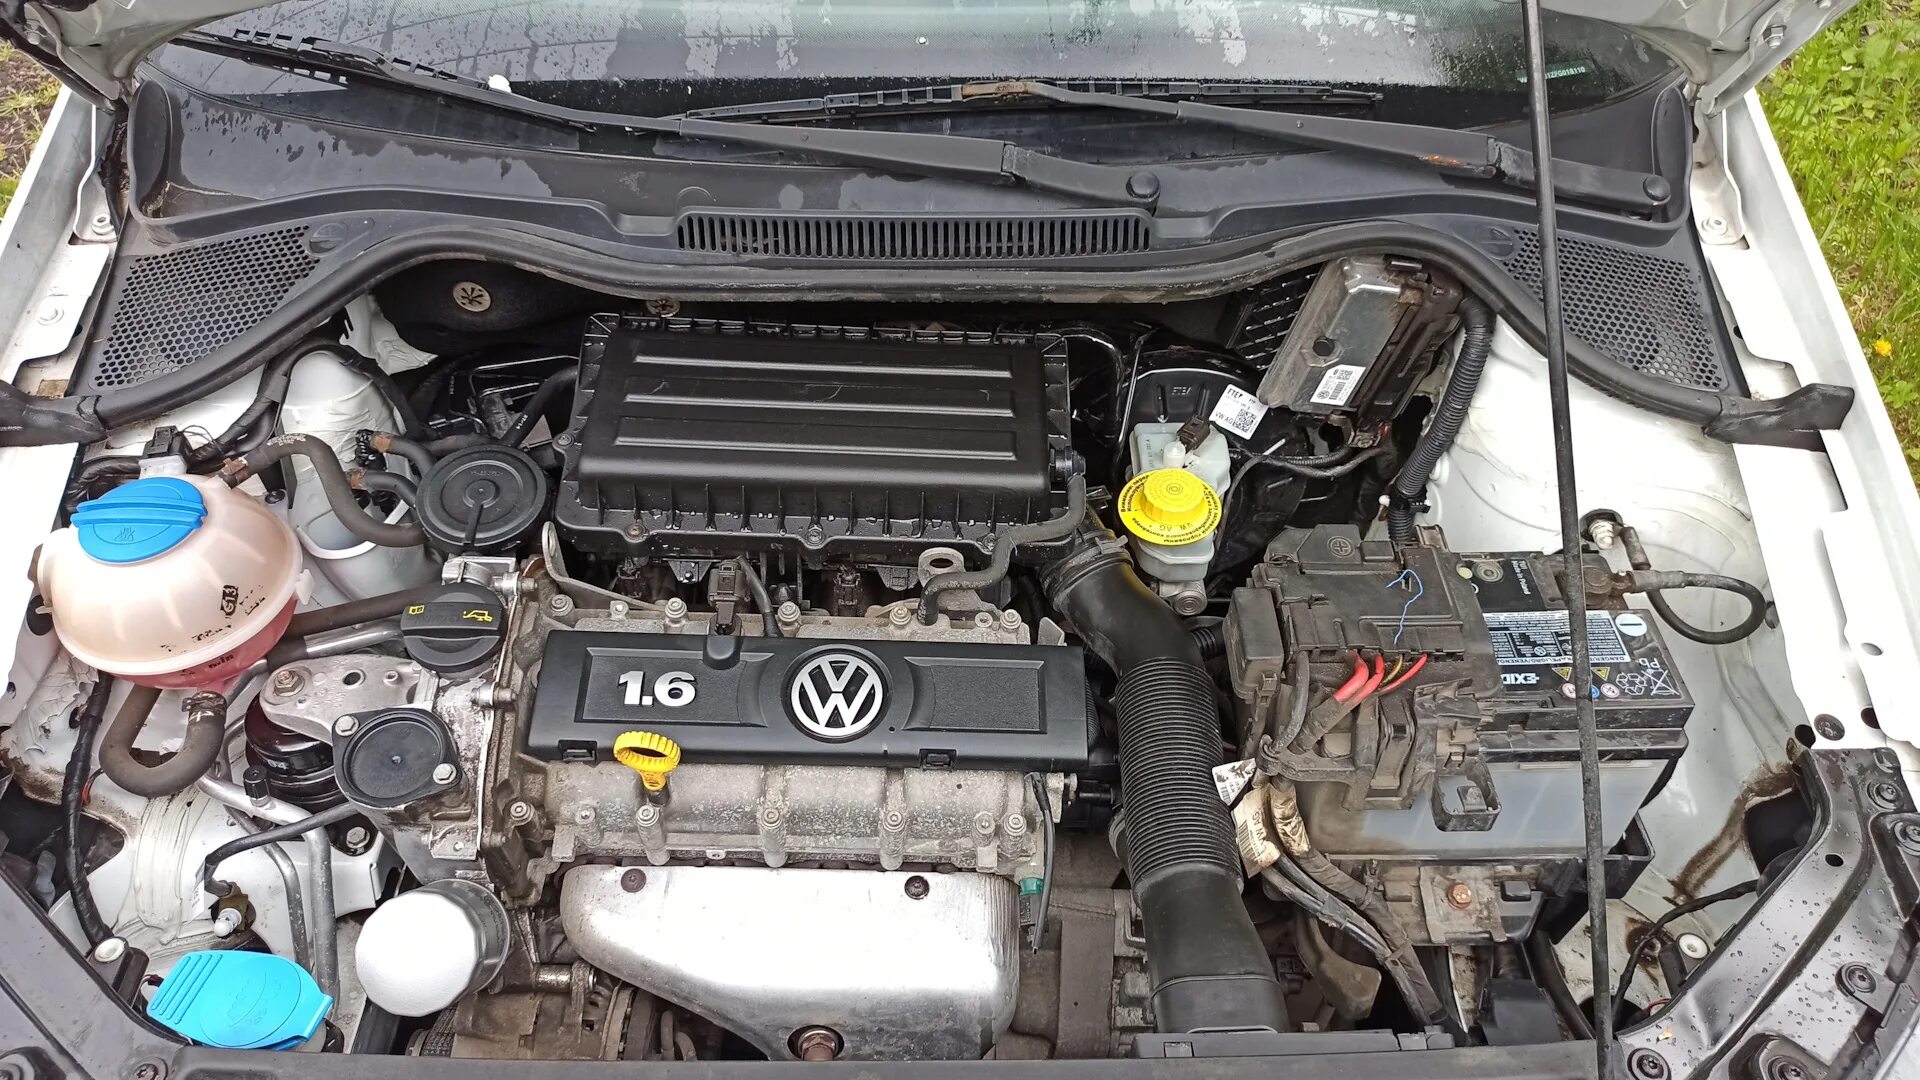 Volkswagen polo 1.6 двигателя. Мотор CFNA 1.6 VW Polo. Поло седан 1.6 CFNA. Двигатель Фольксваген поло седан 1.6. Двигатель поло седан 1.6 CFNA.